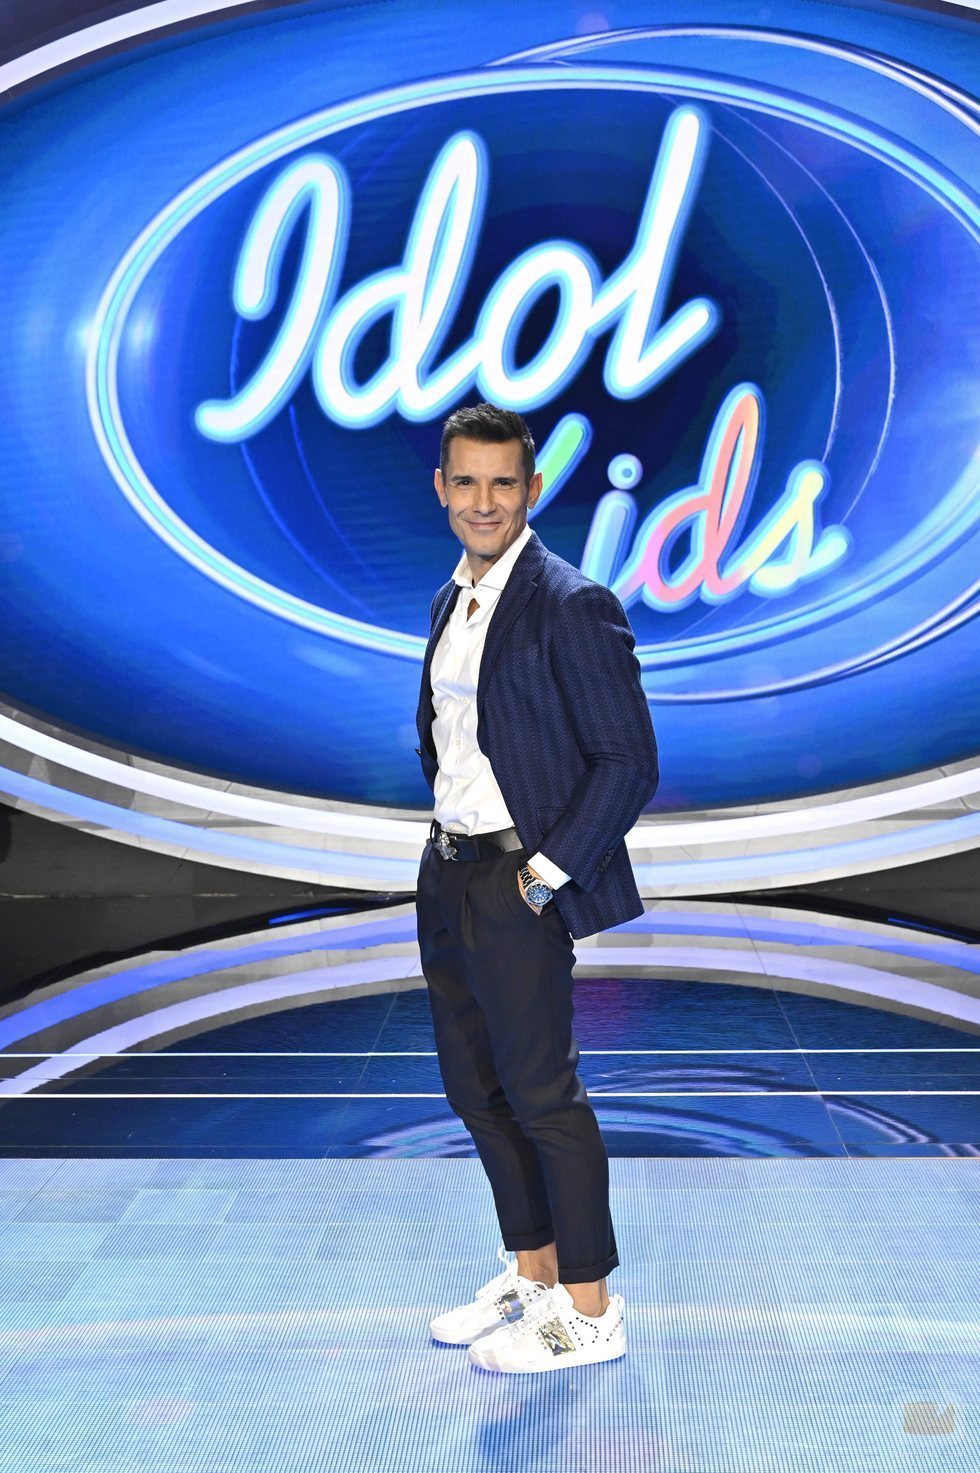 Jesús Vázquez, presentador de 'Idol Kids'